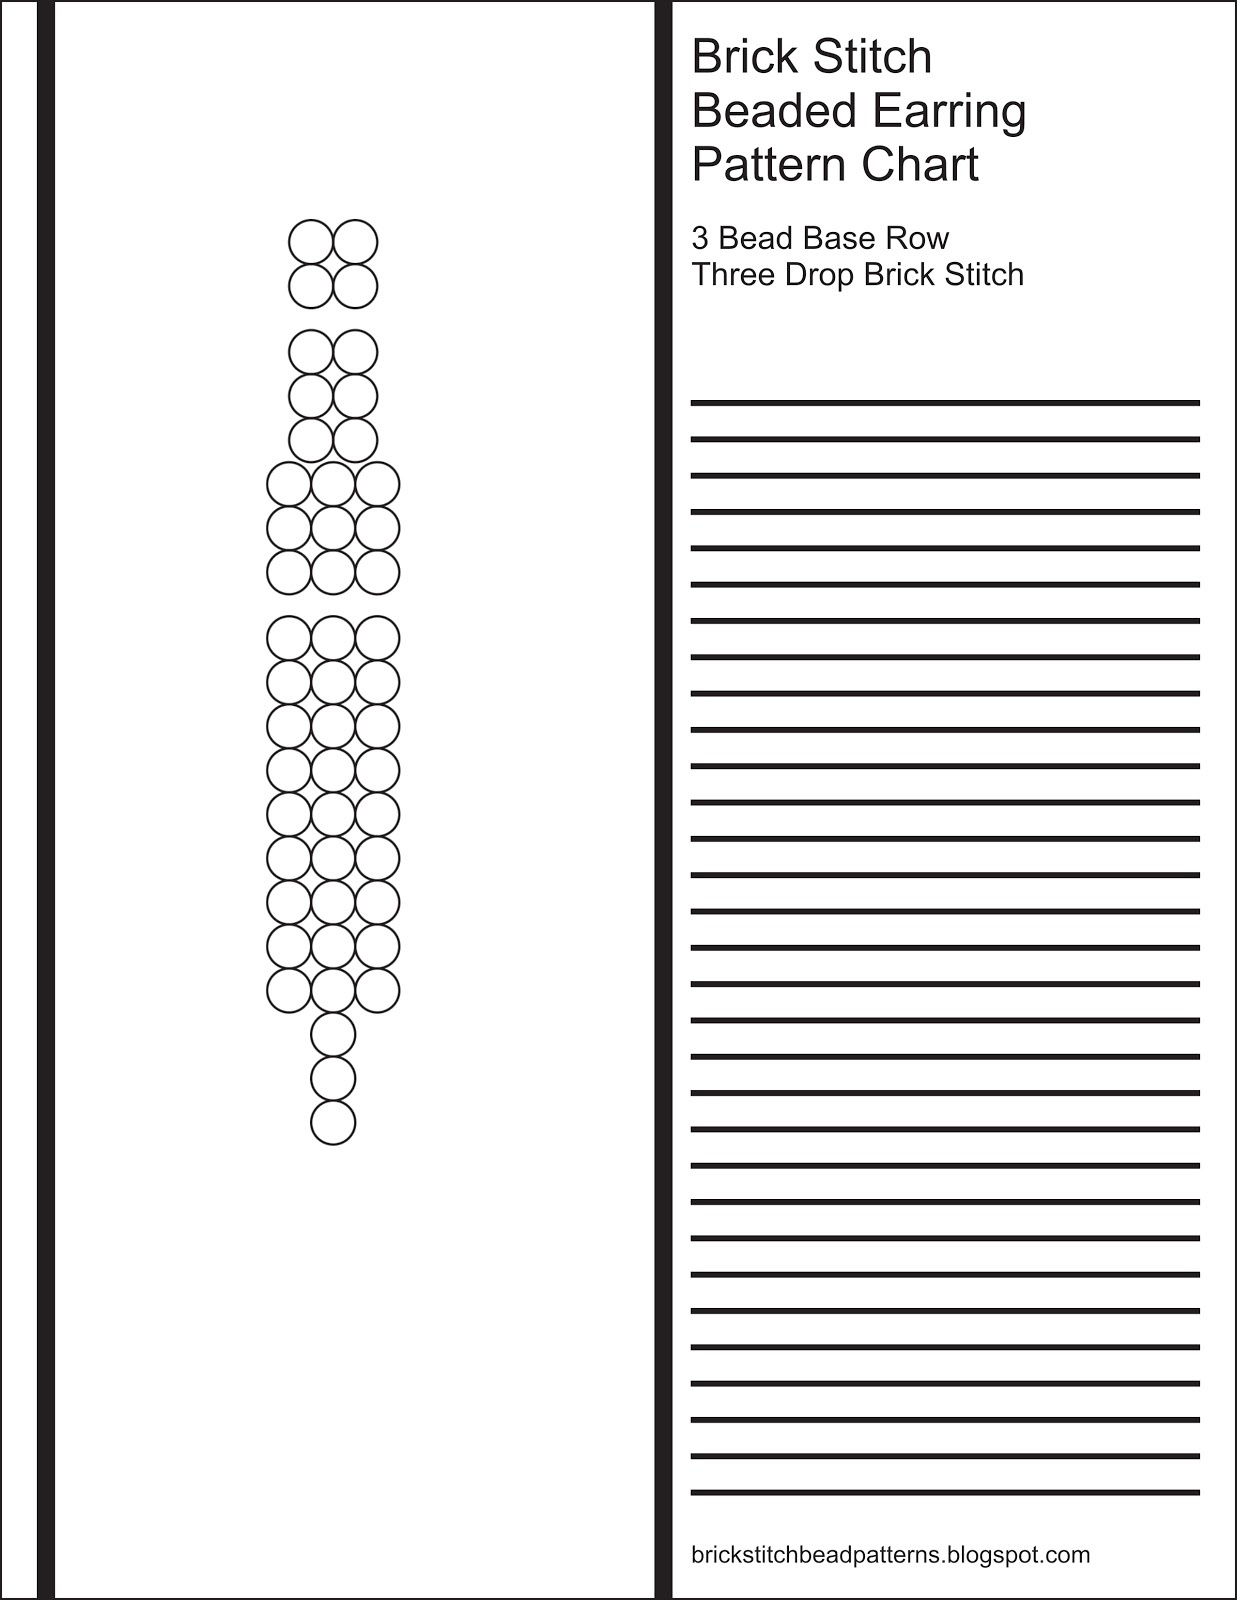 Brick Stitch Bead Patterns Journal: 3 Bead Base Row 3 Drop Blank - Free Printable Beading Patterns